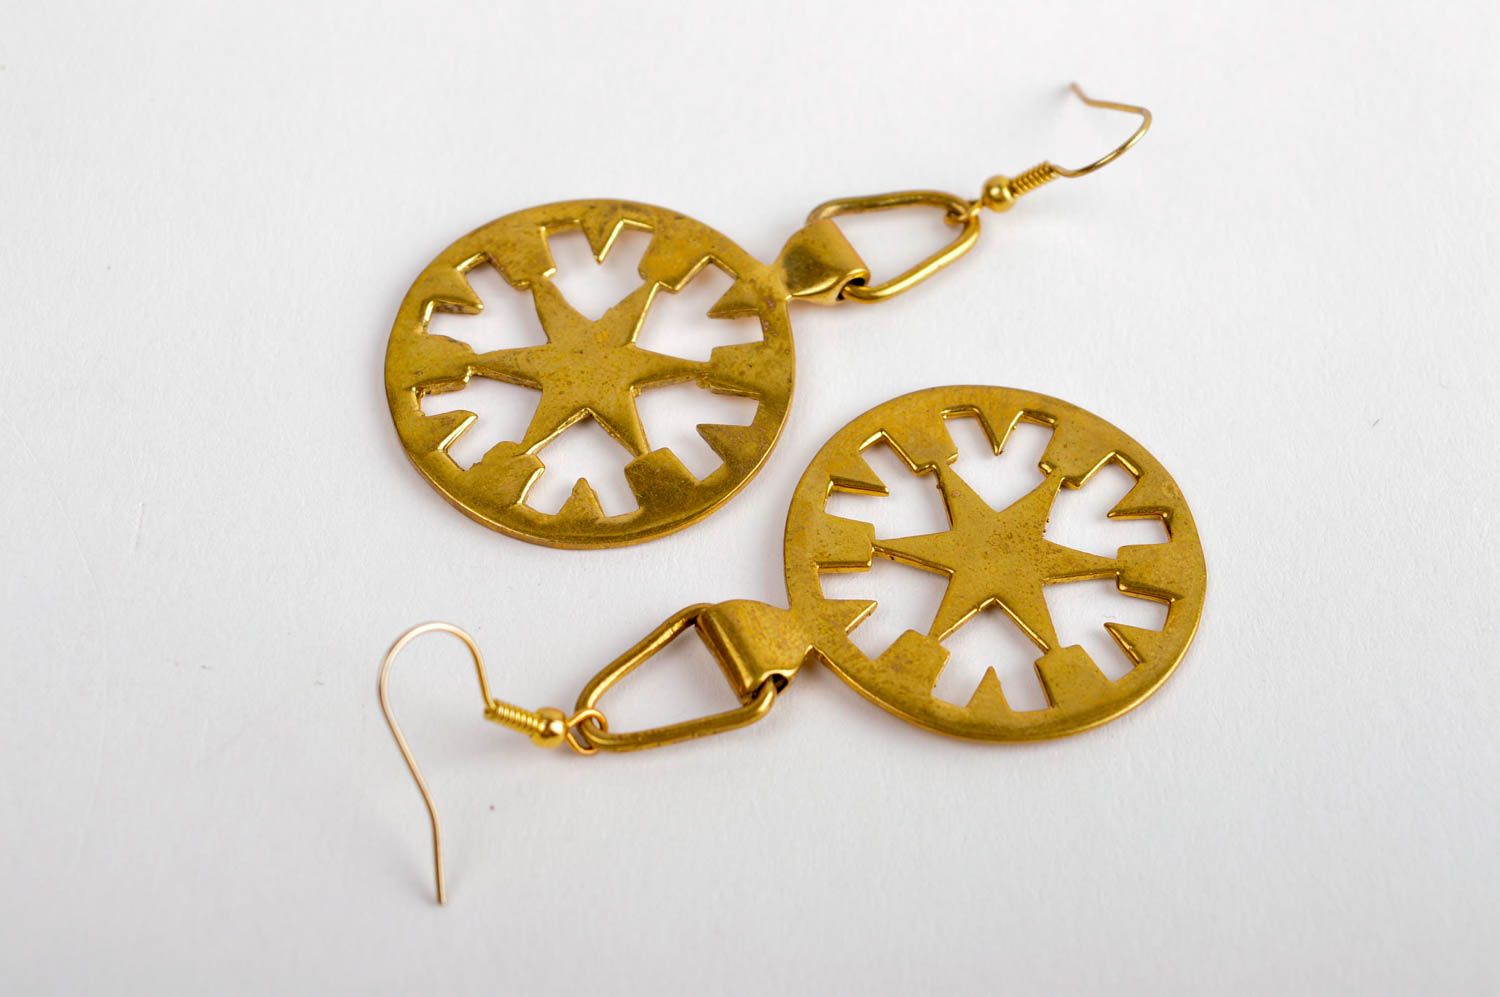 Stylish handmade metal earrings beautiful jewellery fashion trends gift ideas photo 4